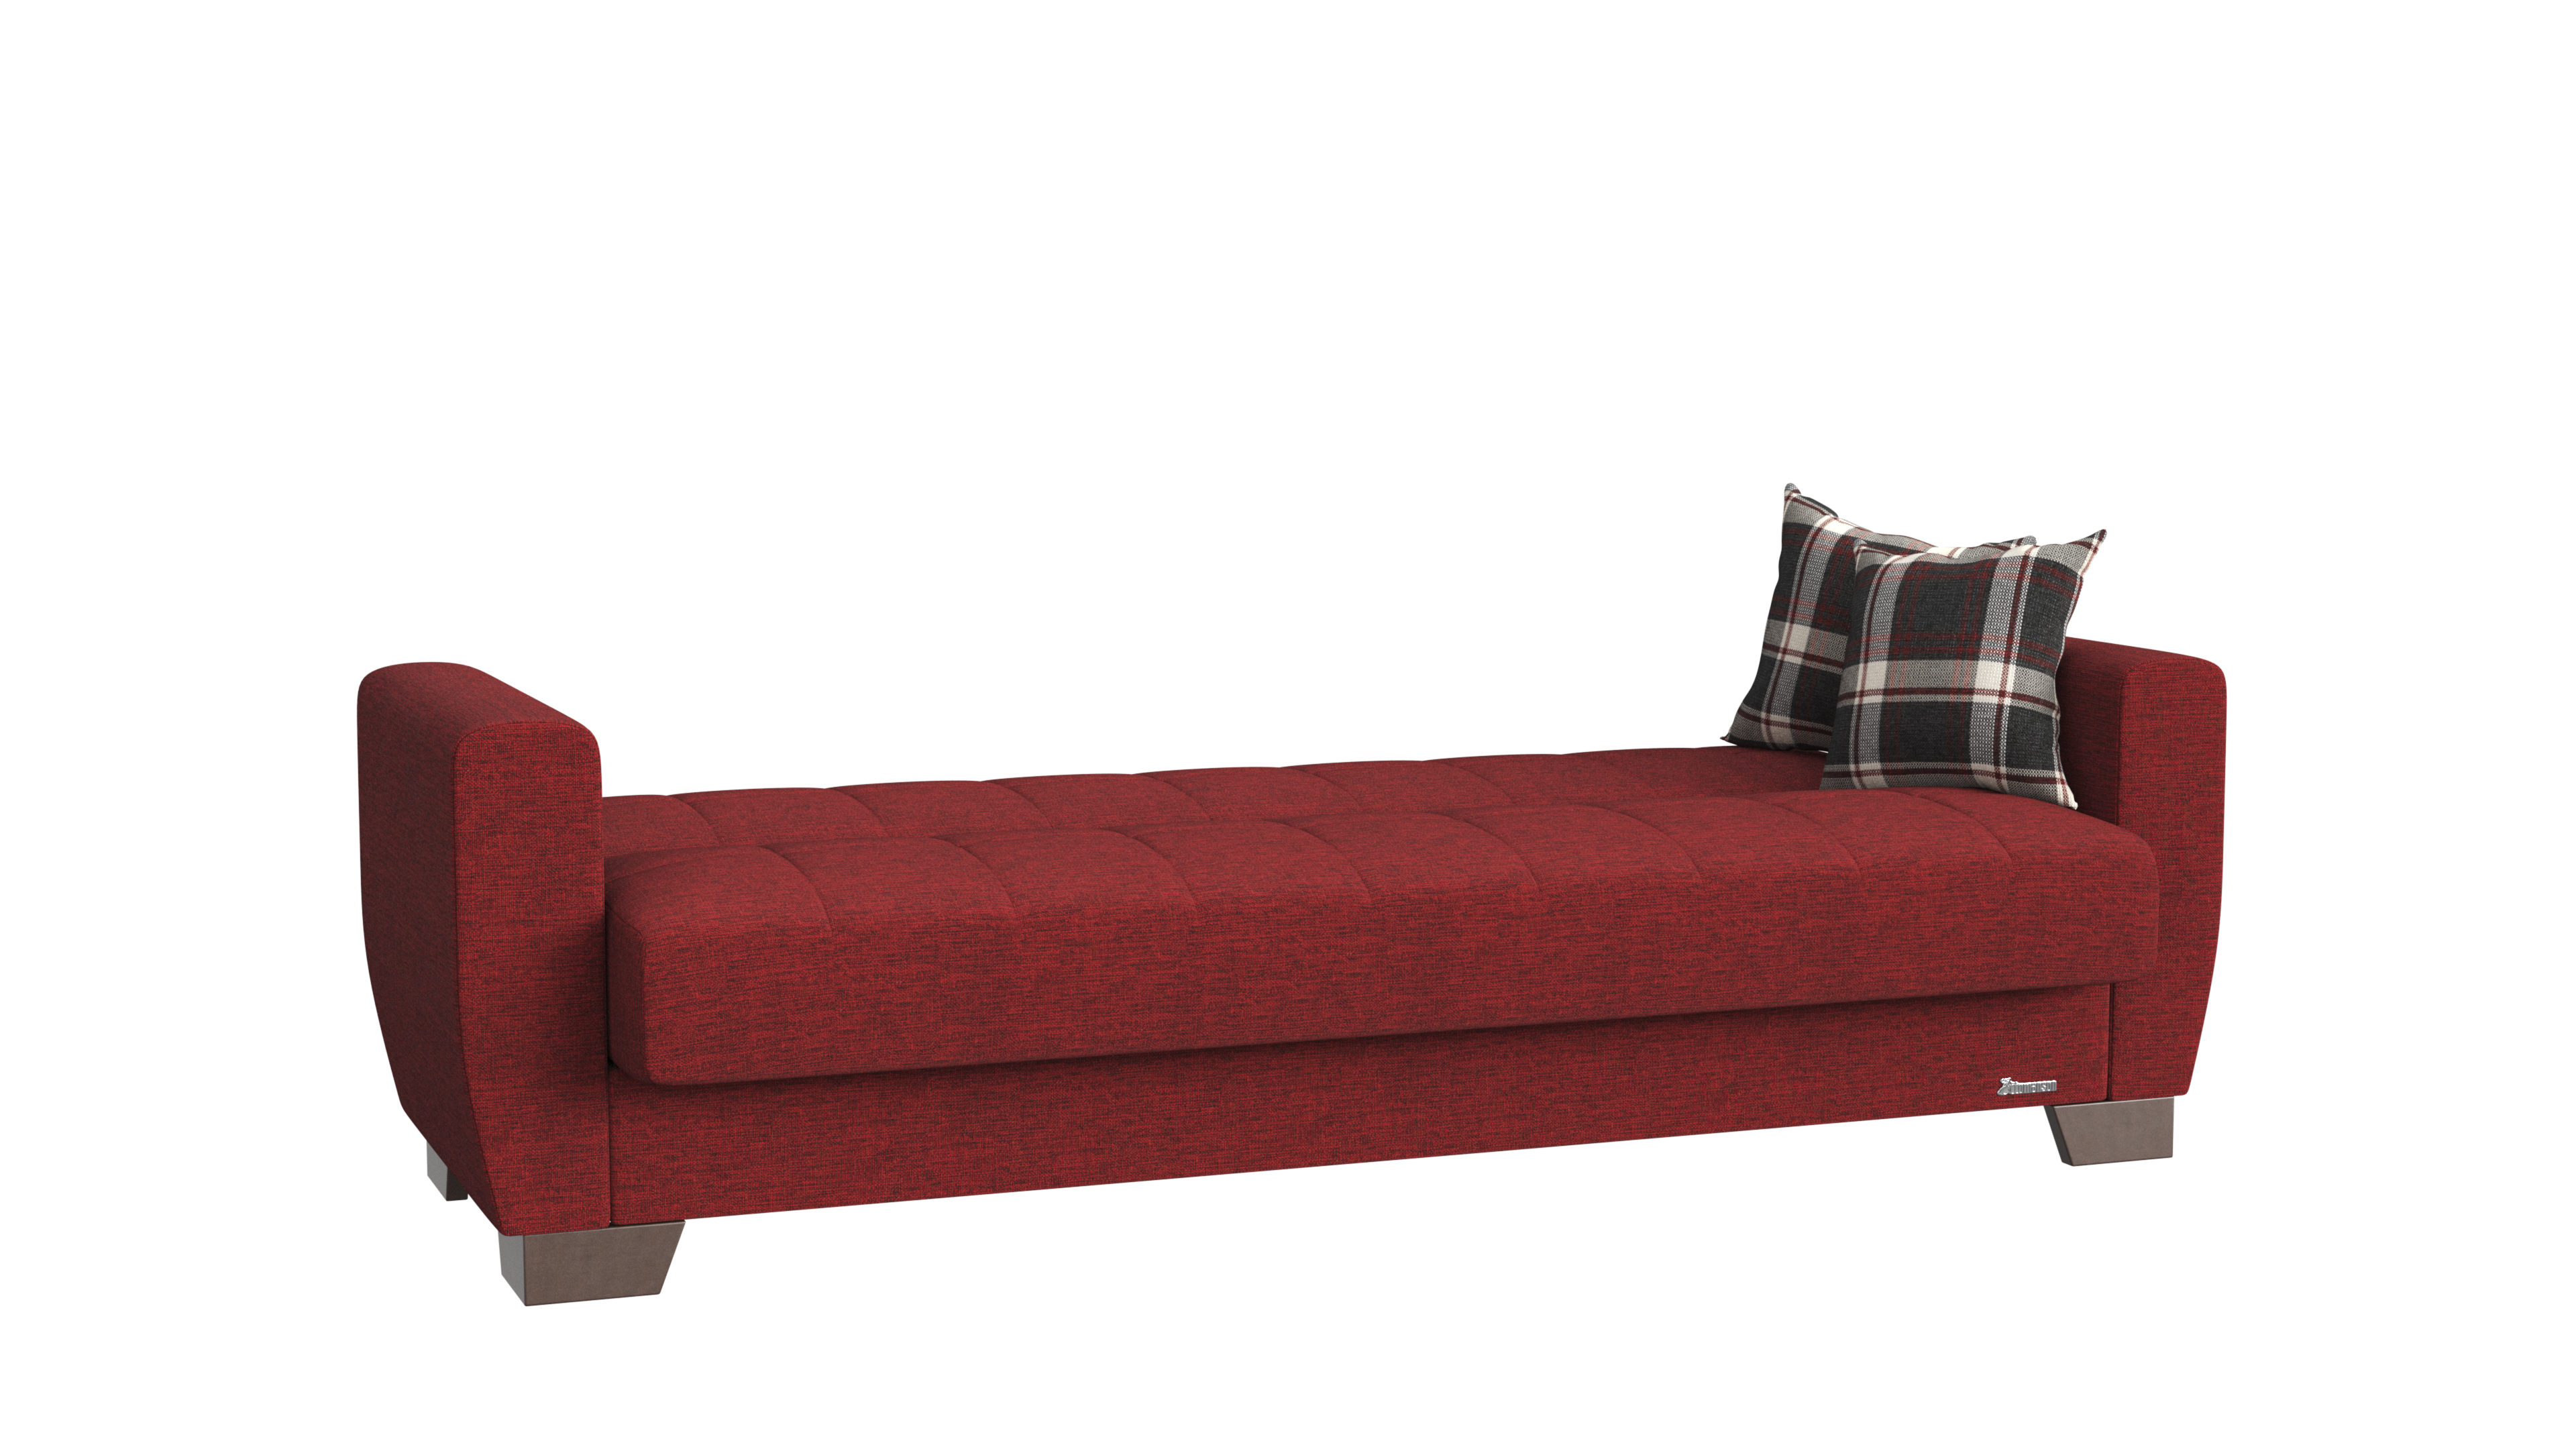 Barato Sleeper With Storage - ASY Furniture